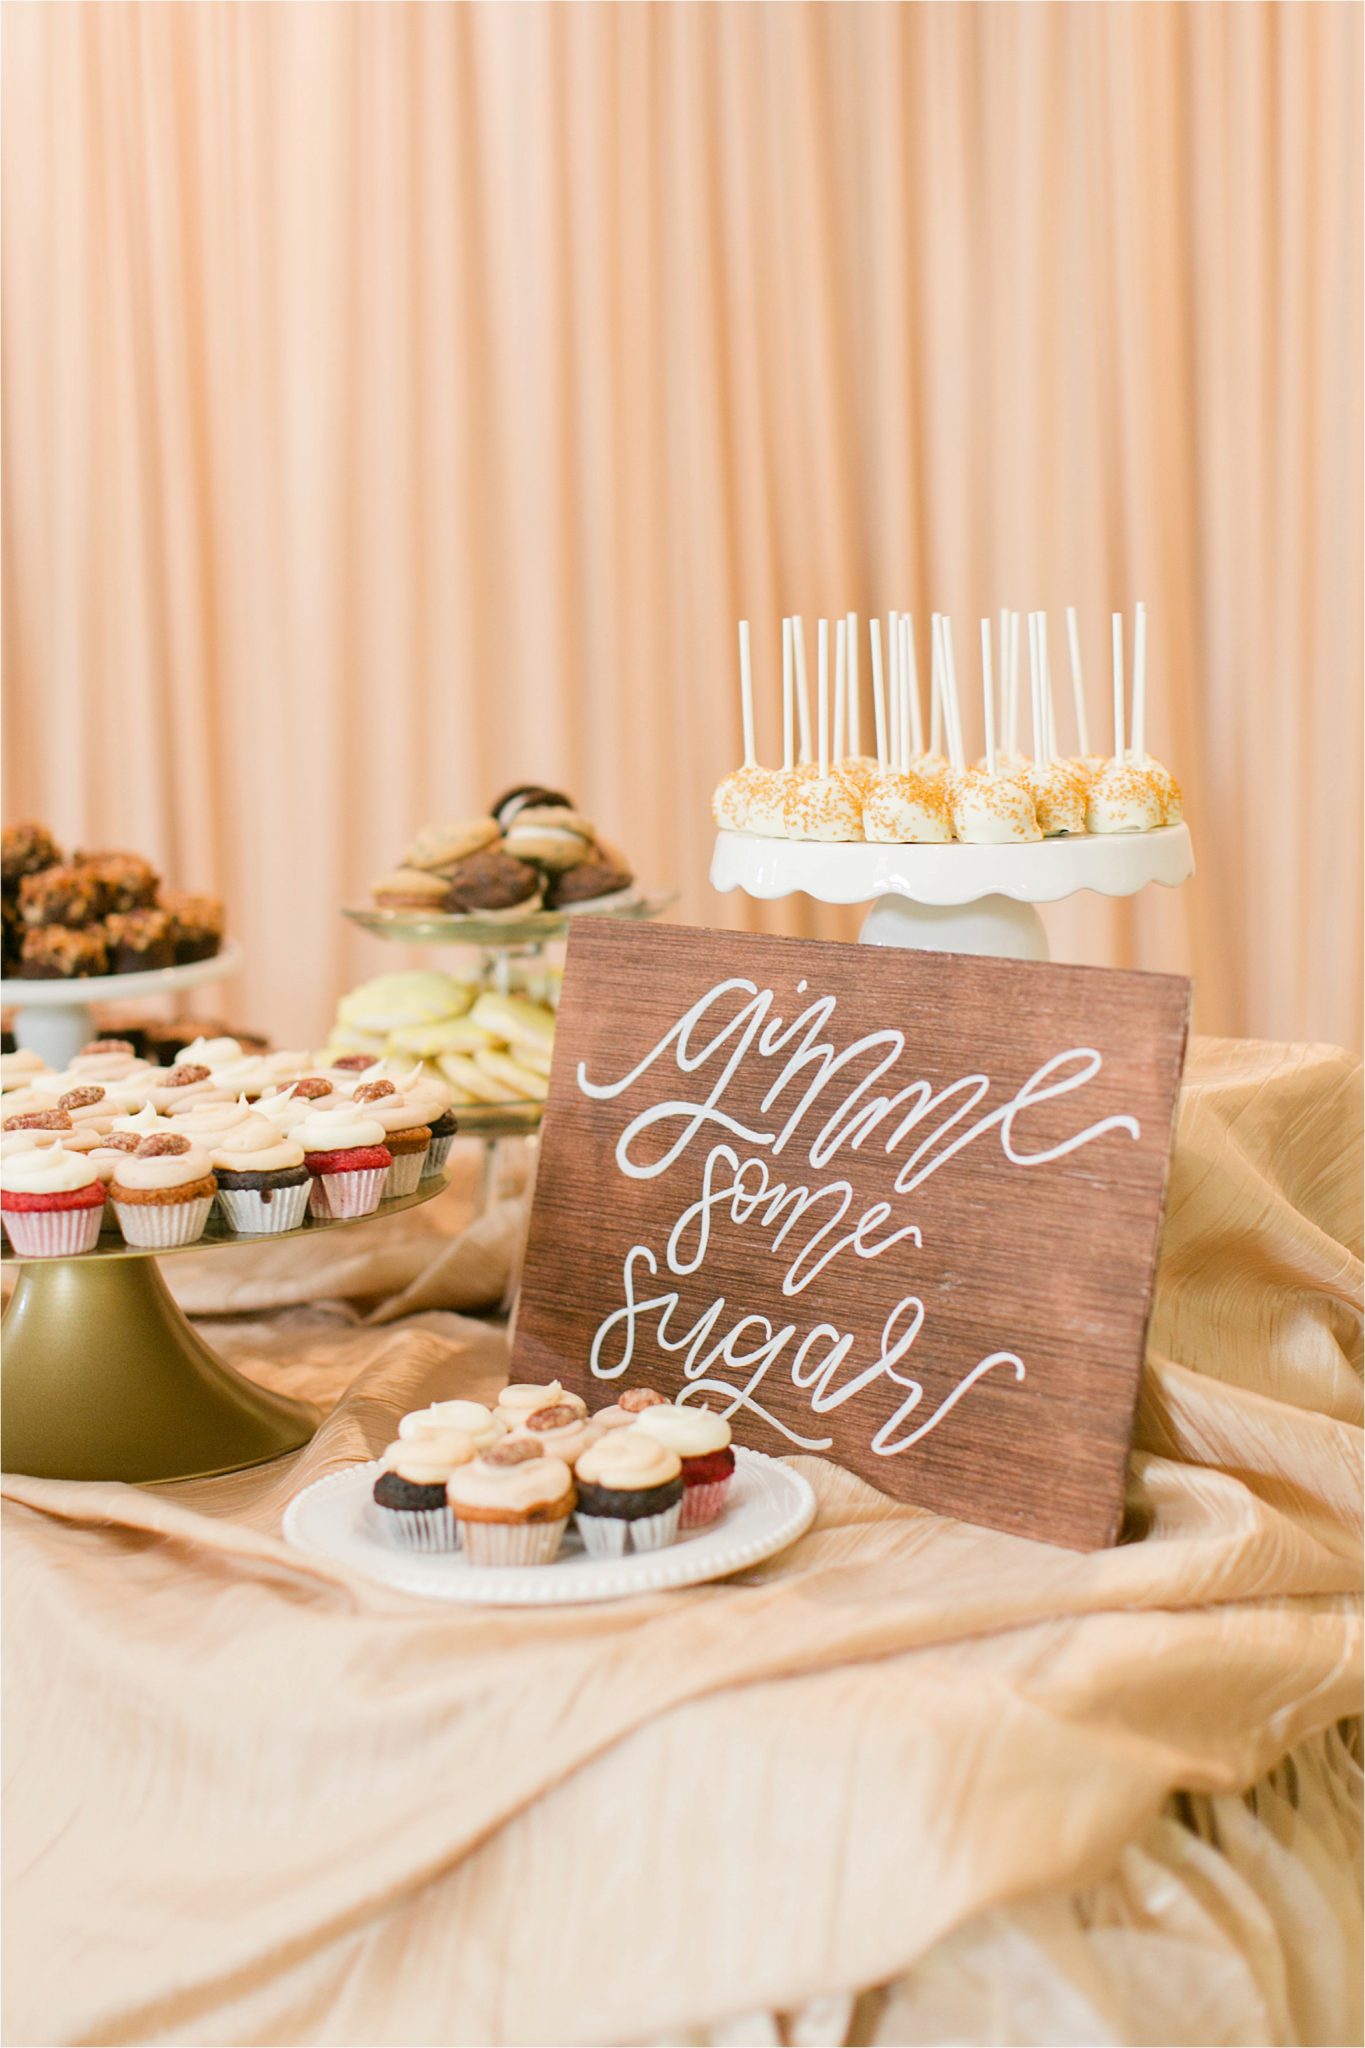 EllenJay Dessert Bar-dessert table-wedding-reception-food ideas-wedding signs-dessert table